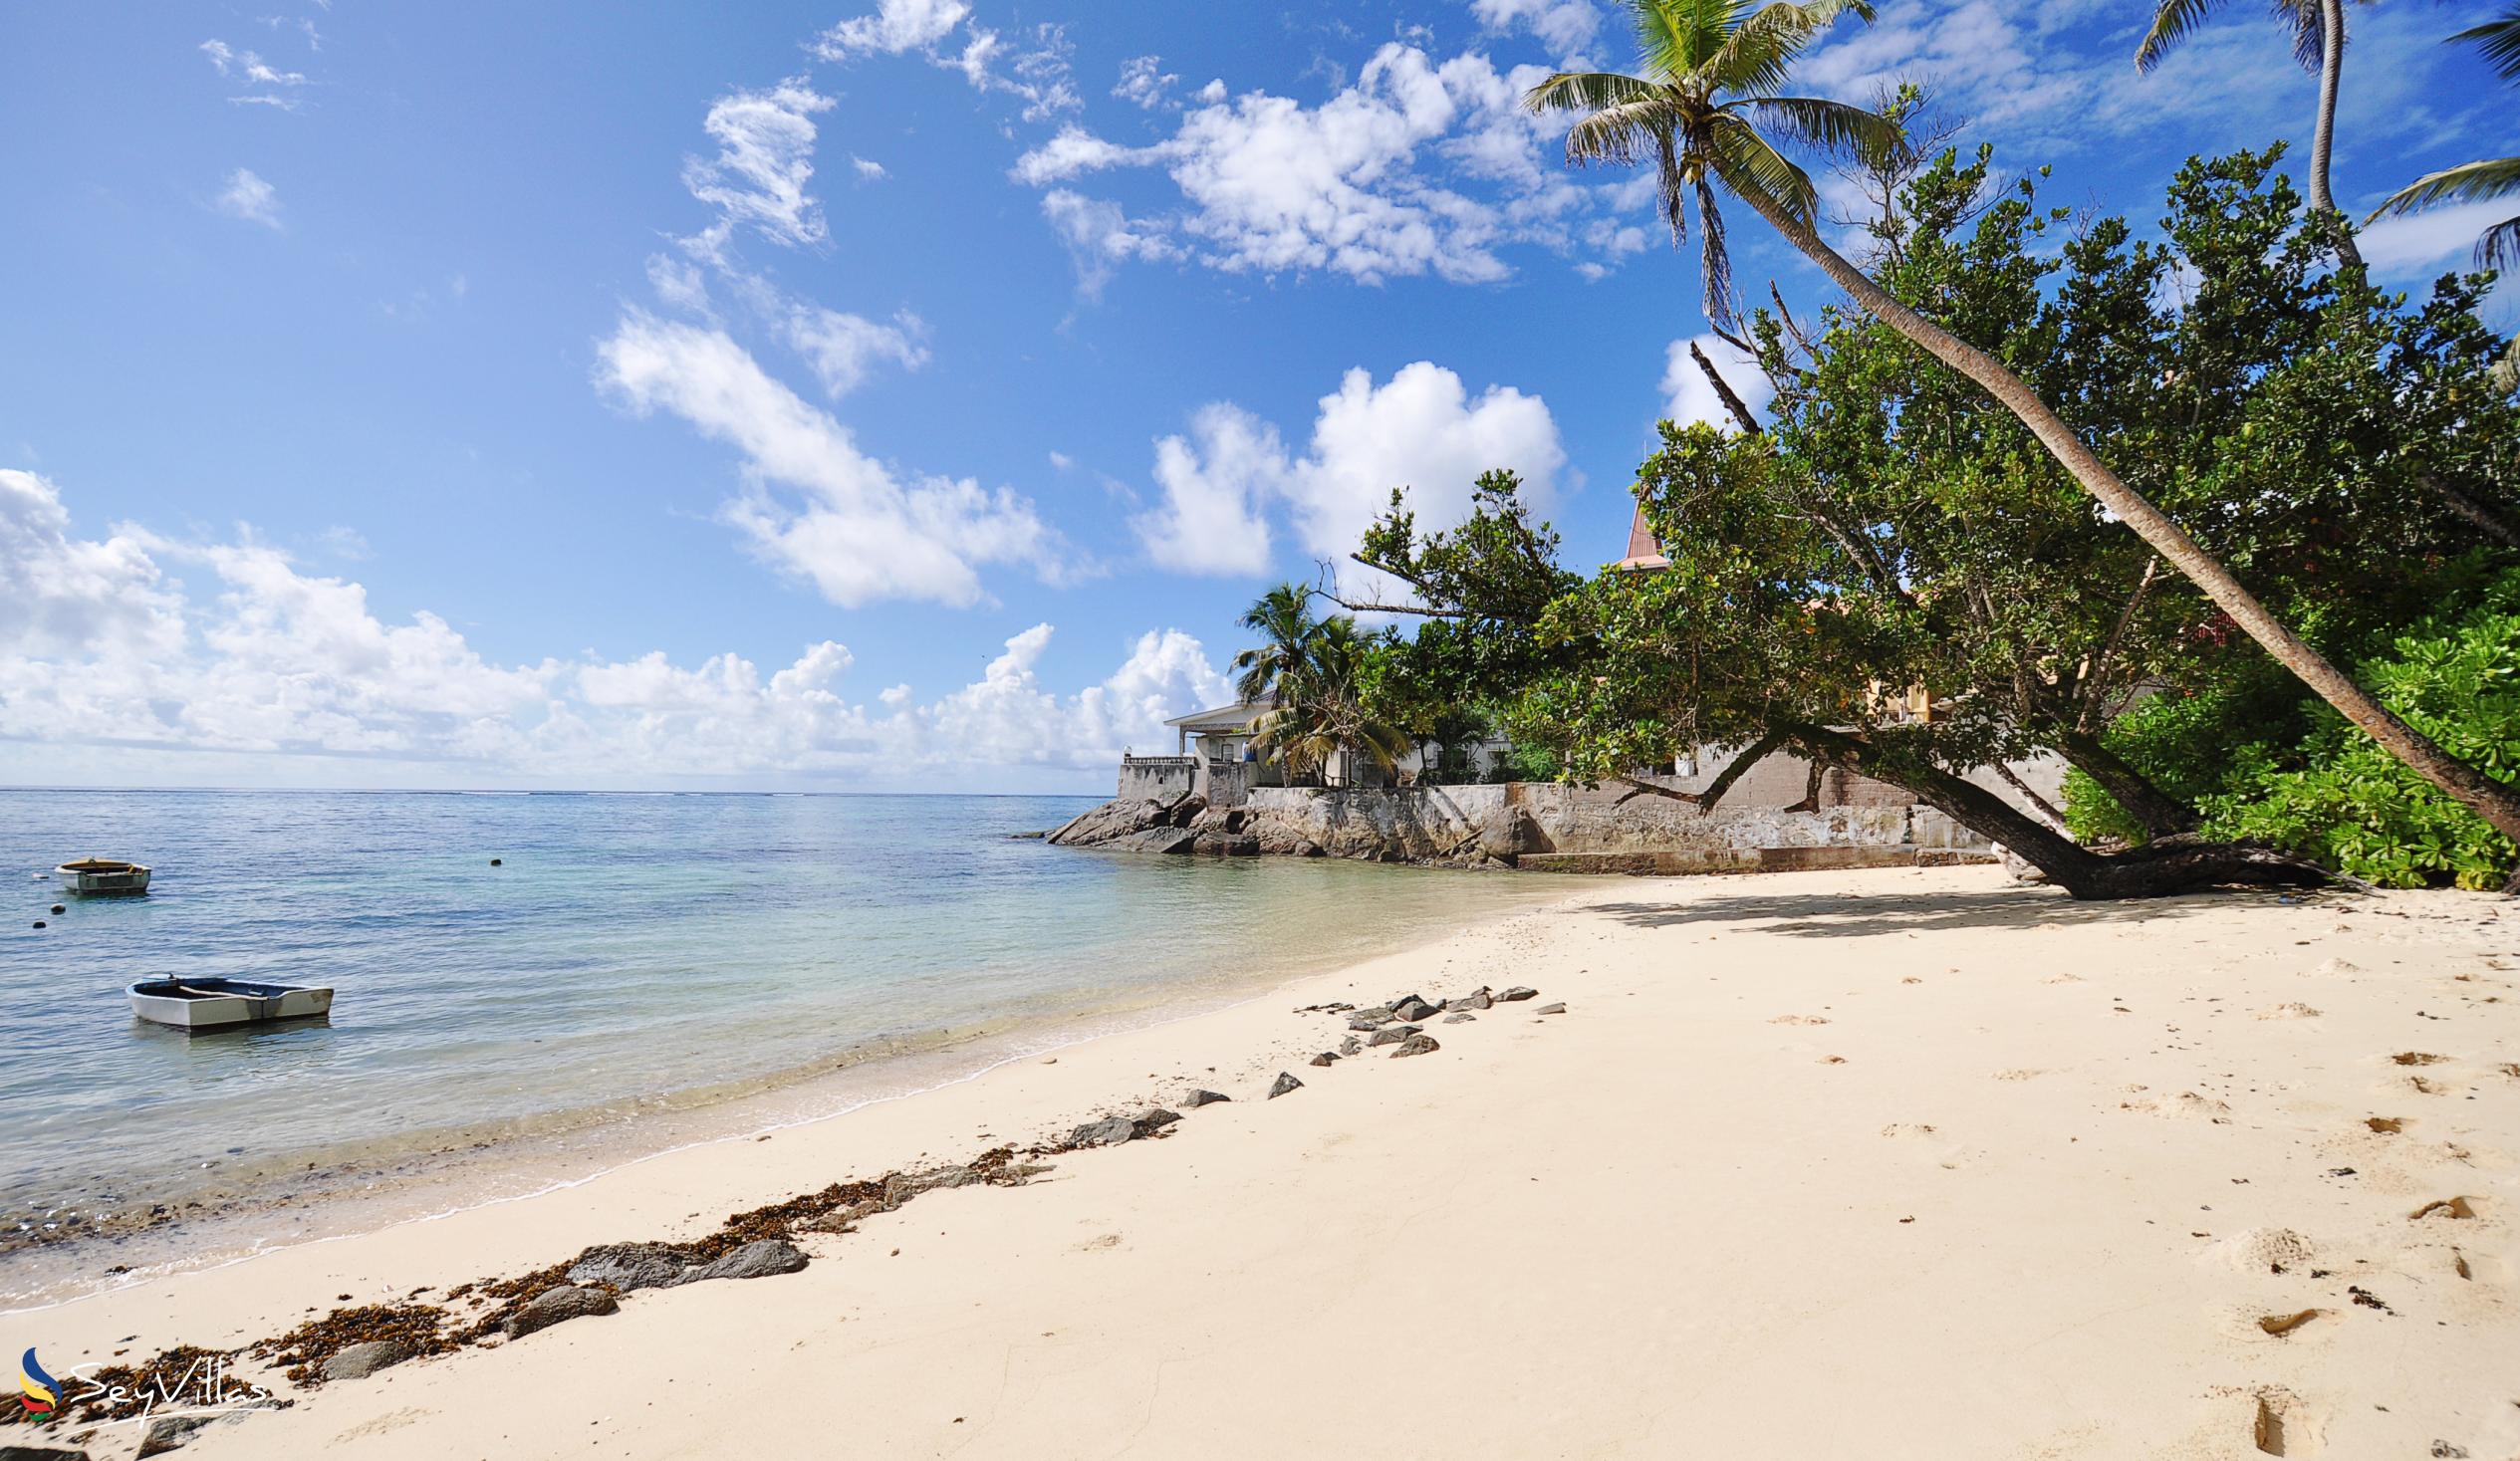 Photo 36: Coco Blanche - Beaches - Mahé (Seychelles)